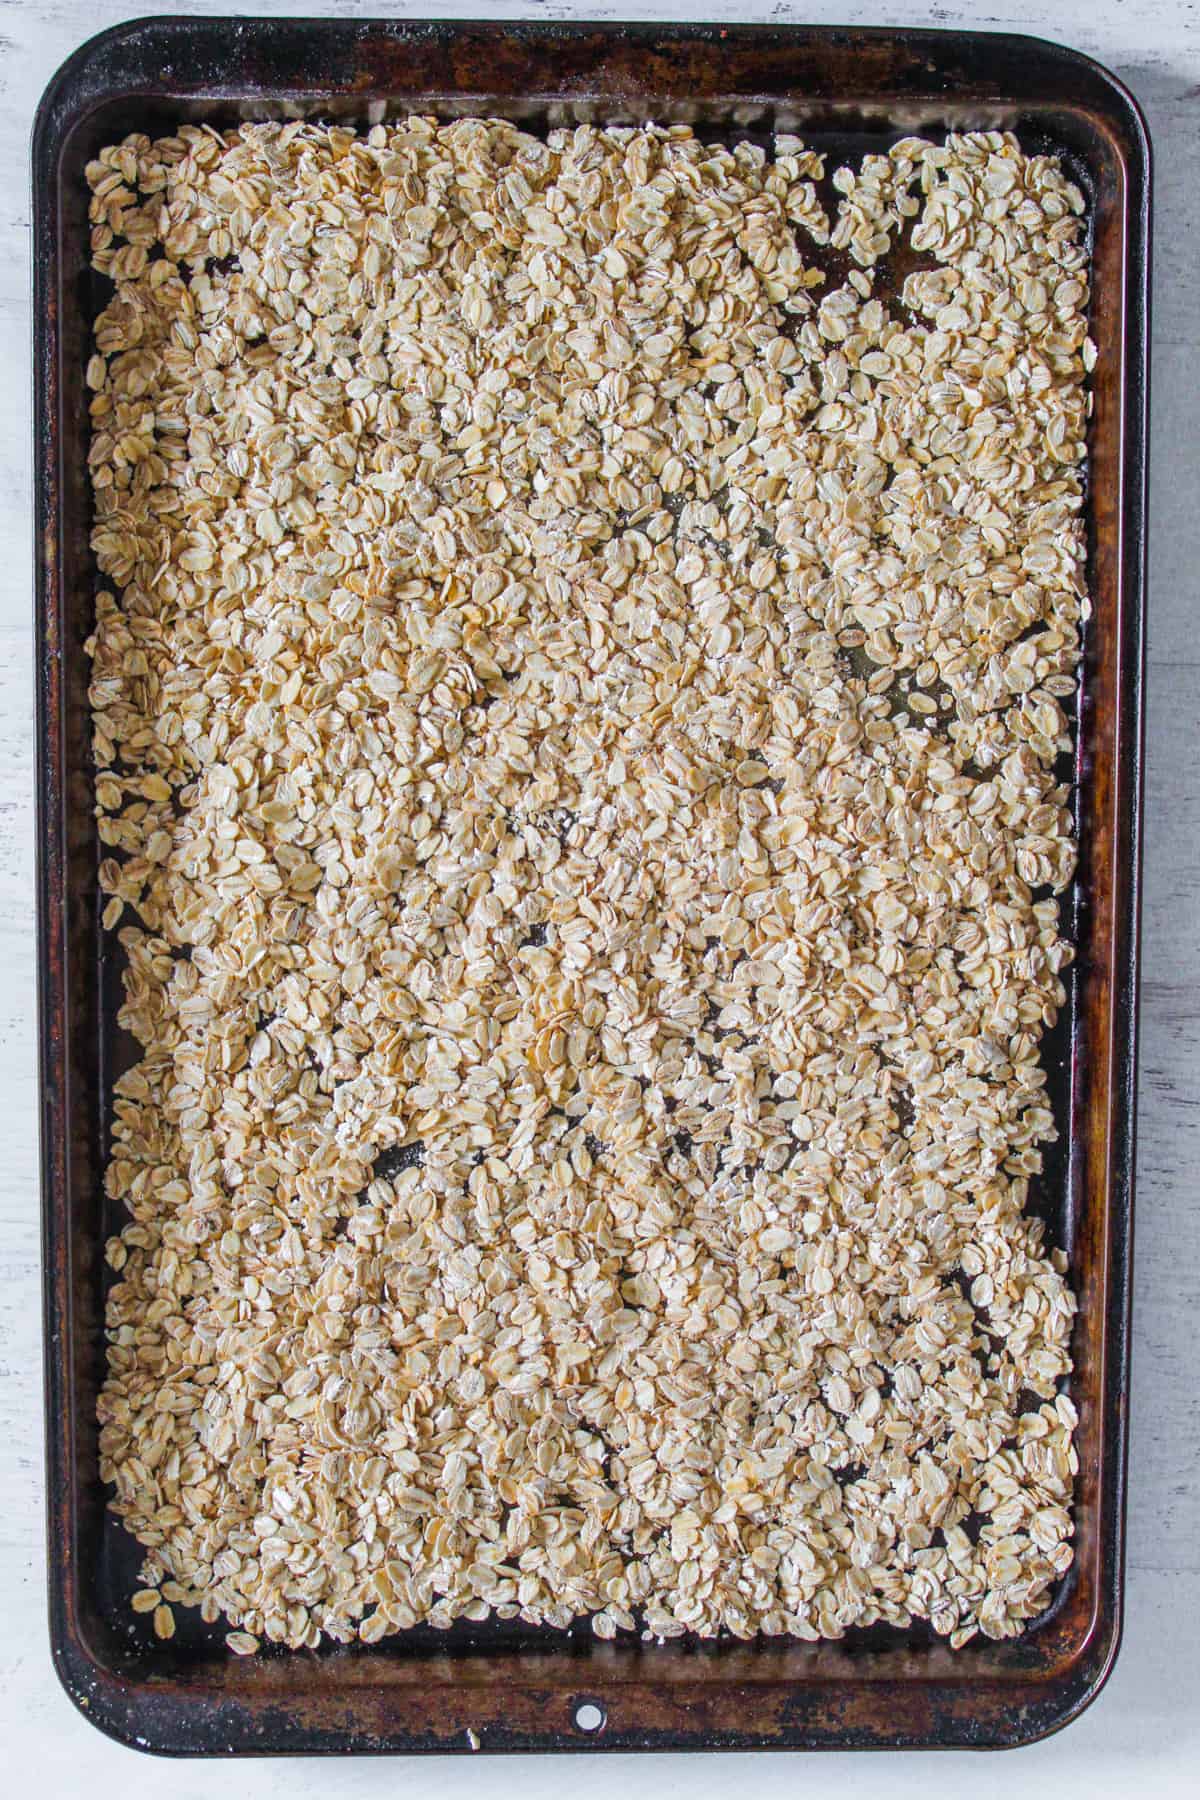 toasting oats on a baking sheet